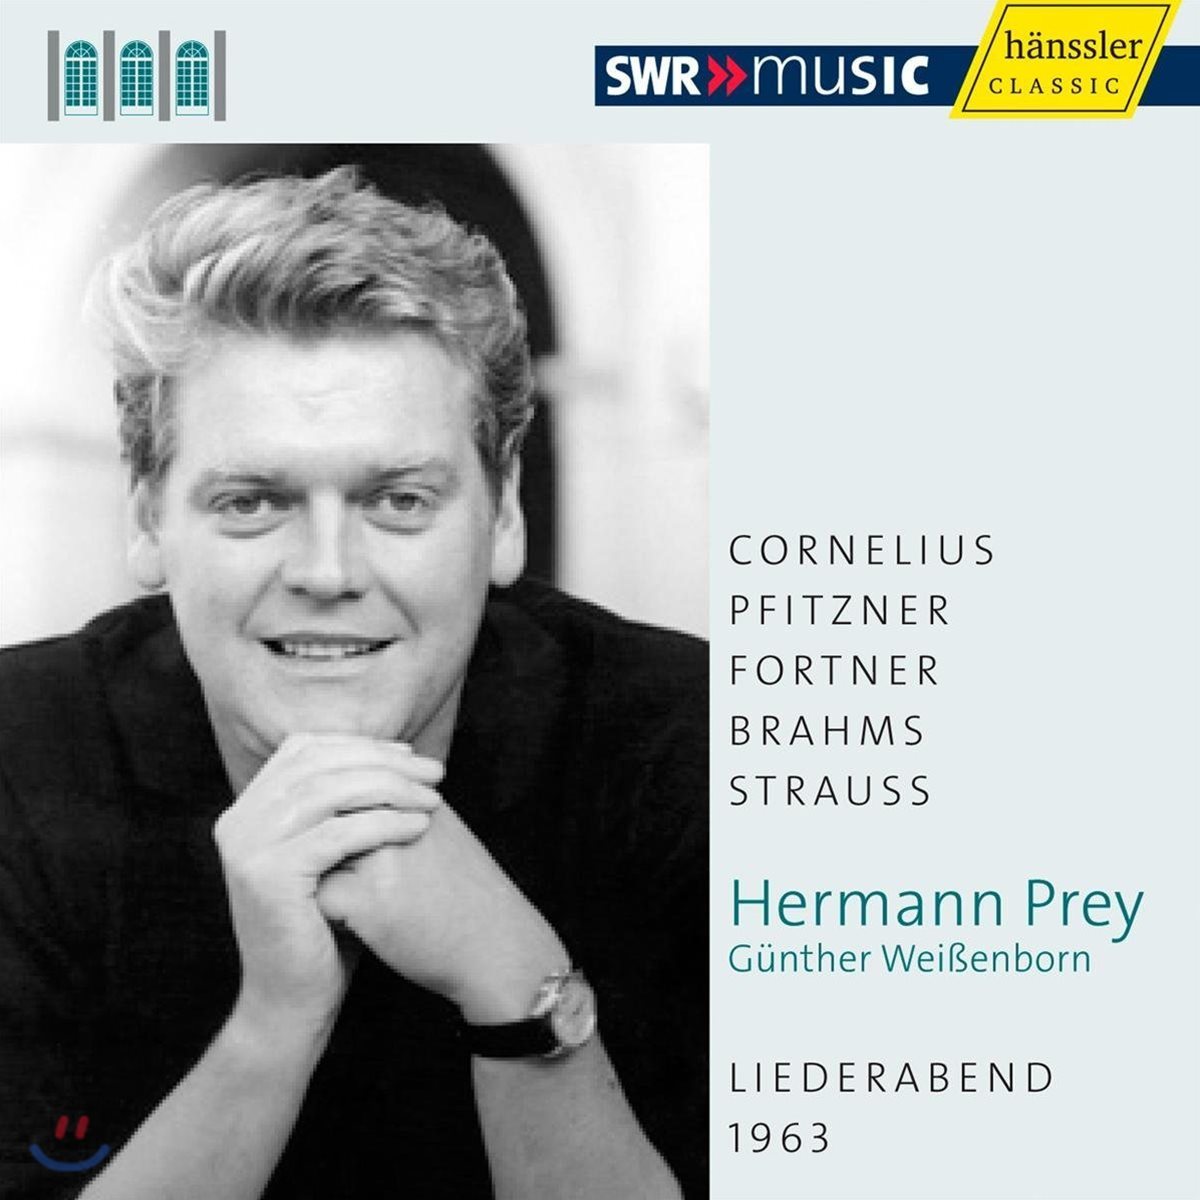 Hermann Prey 1963년 가곡의 밤 - 코르넬리우스 / 브람스 / 슈트라우스 외 (Liederabend 1963 - Cornelius / Brahms / Strauss)